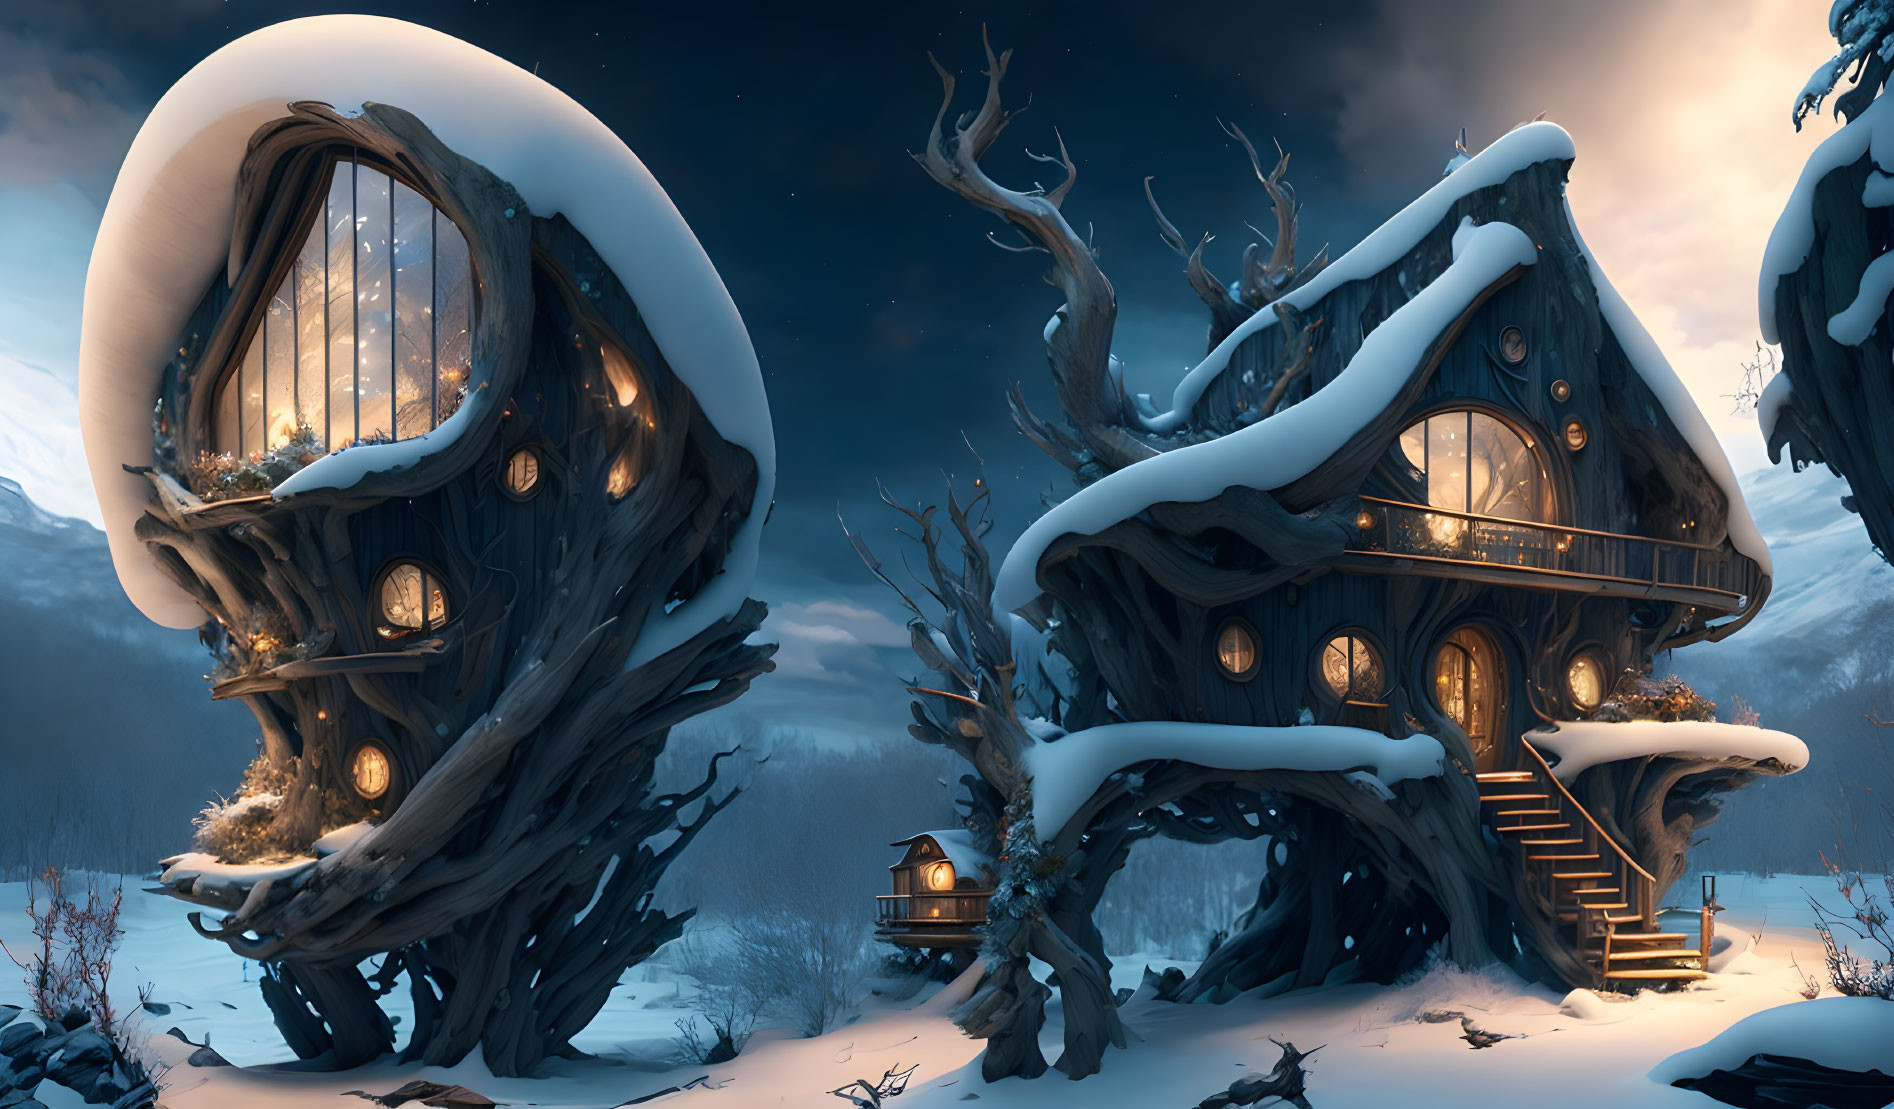 Snowy Twilight Scene: Whimsical Glowing Treehouses in Winter Landscape